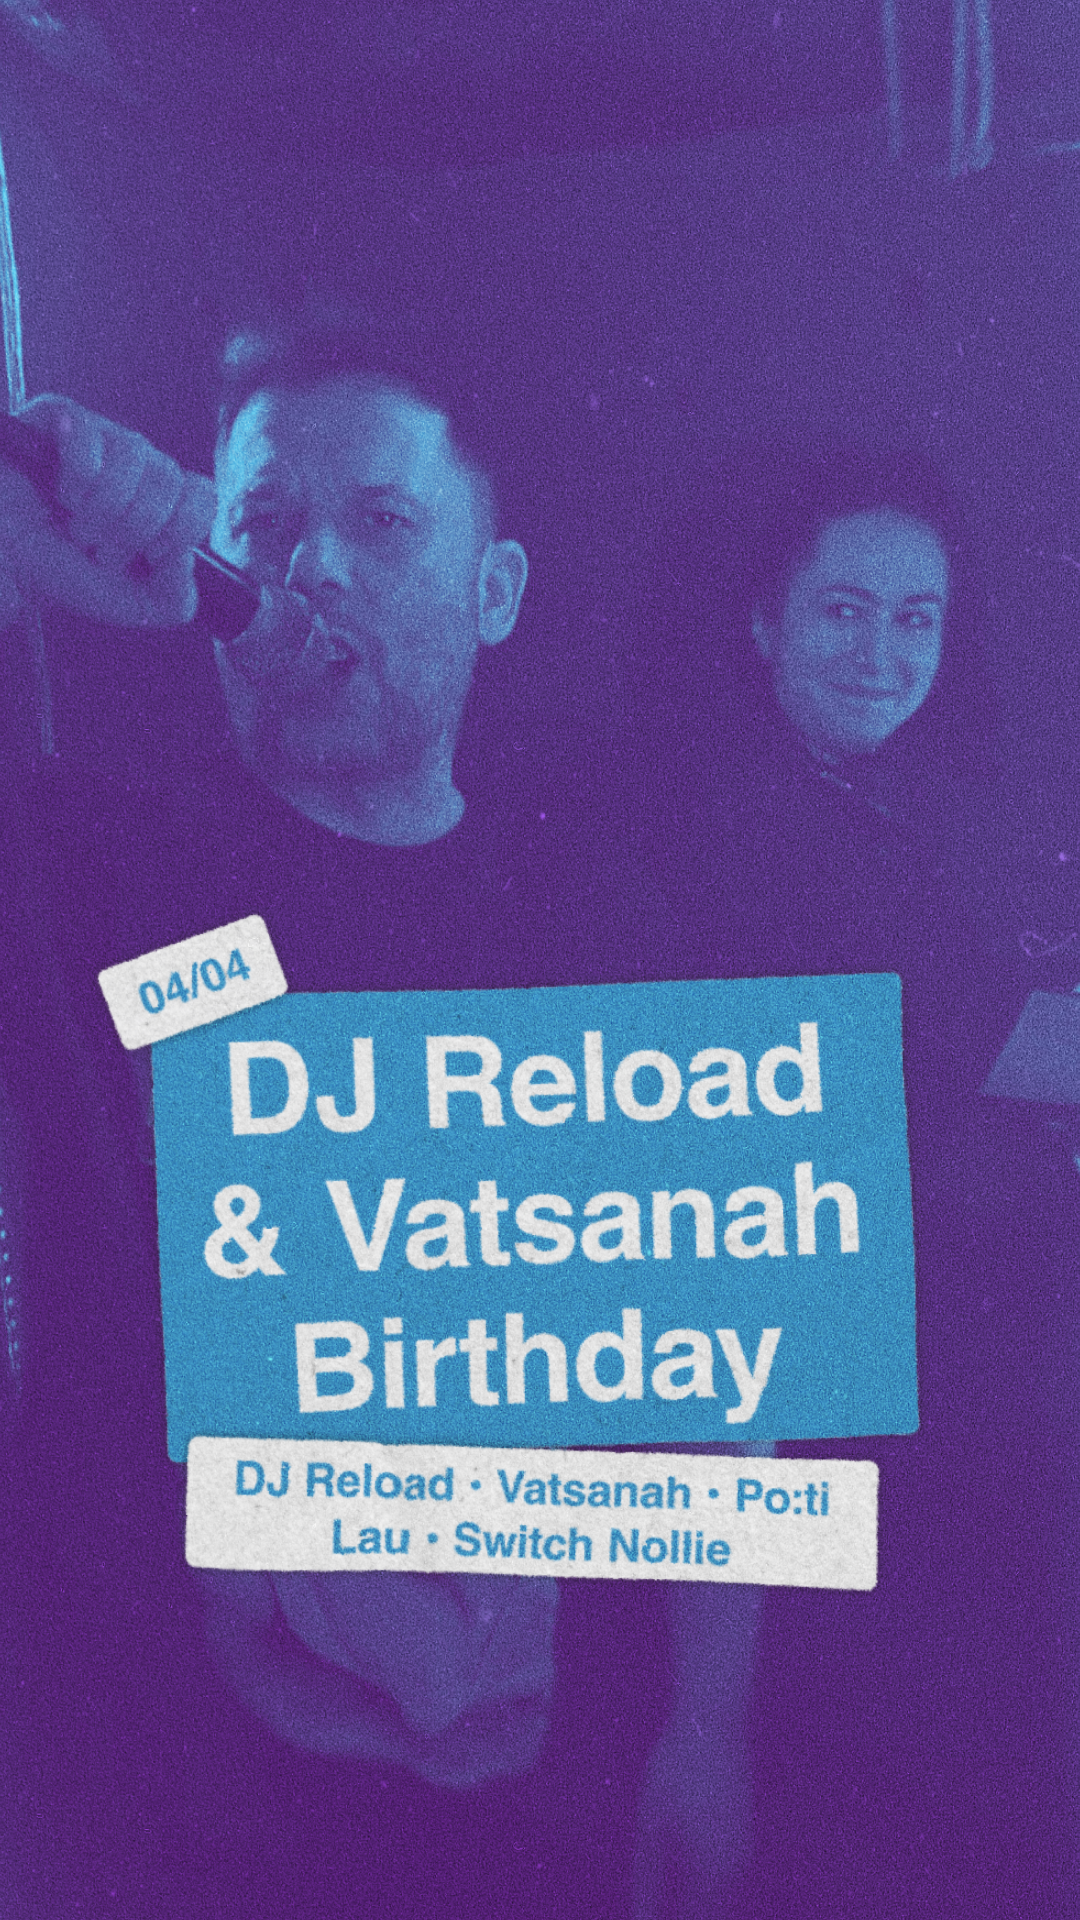 DJ Reload and Vatsanah birthday - フライヤー表